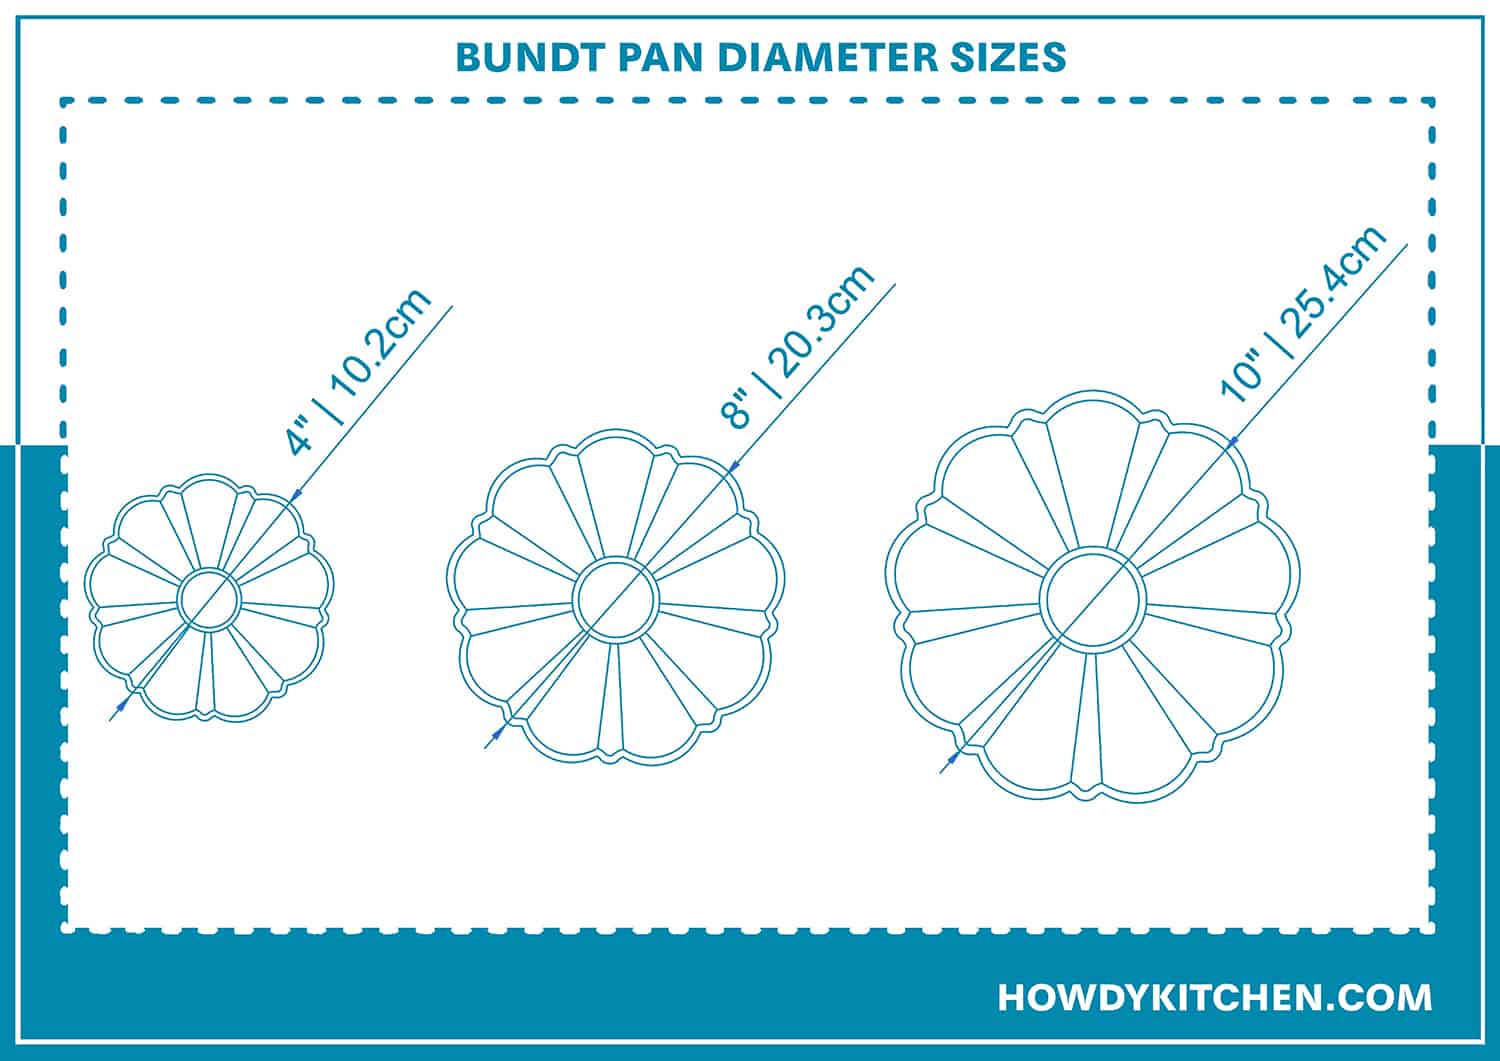 Bundt Pan Diameter Sizes